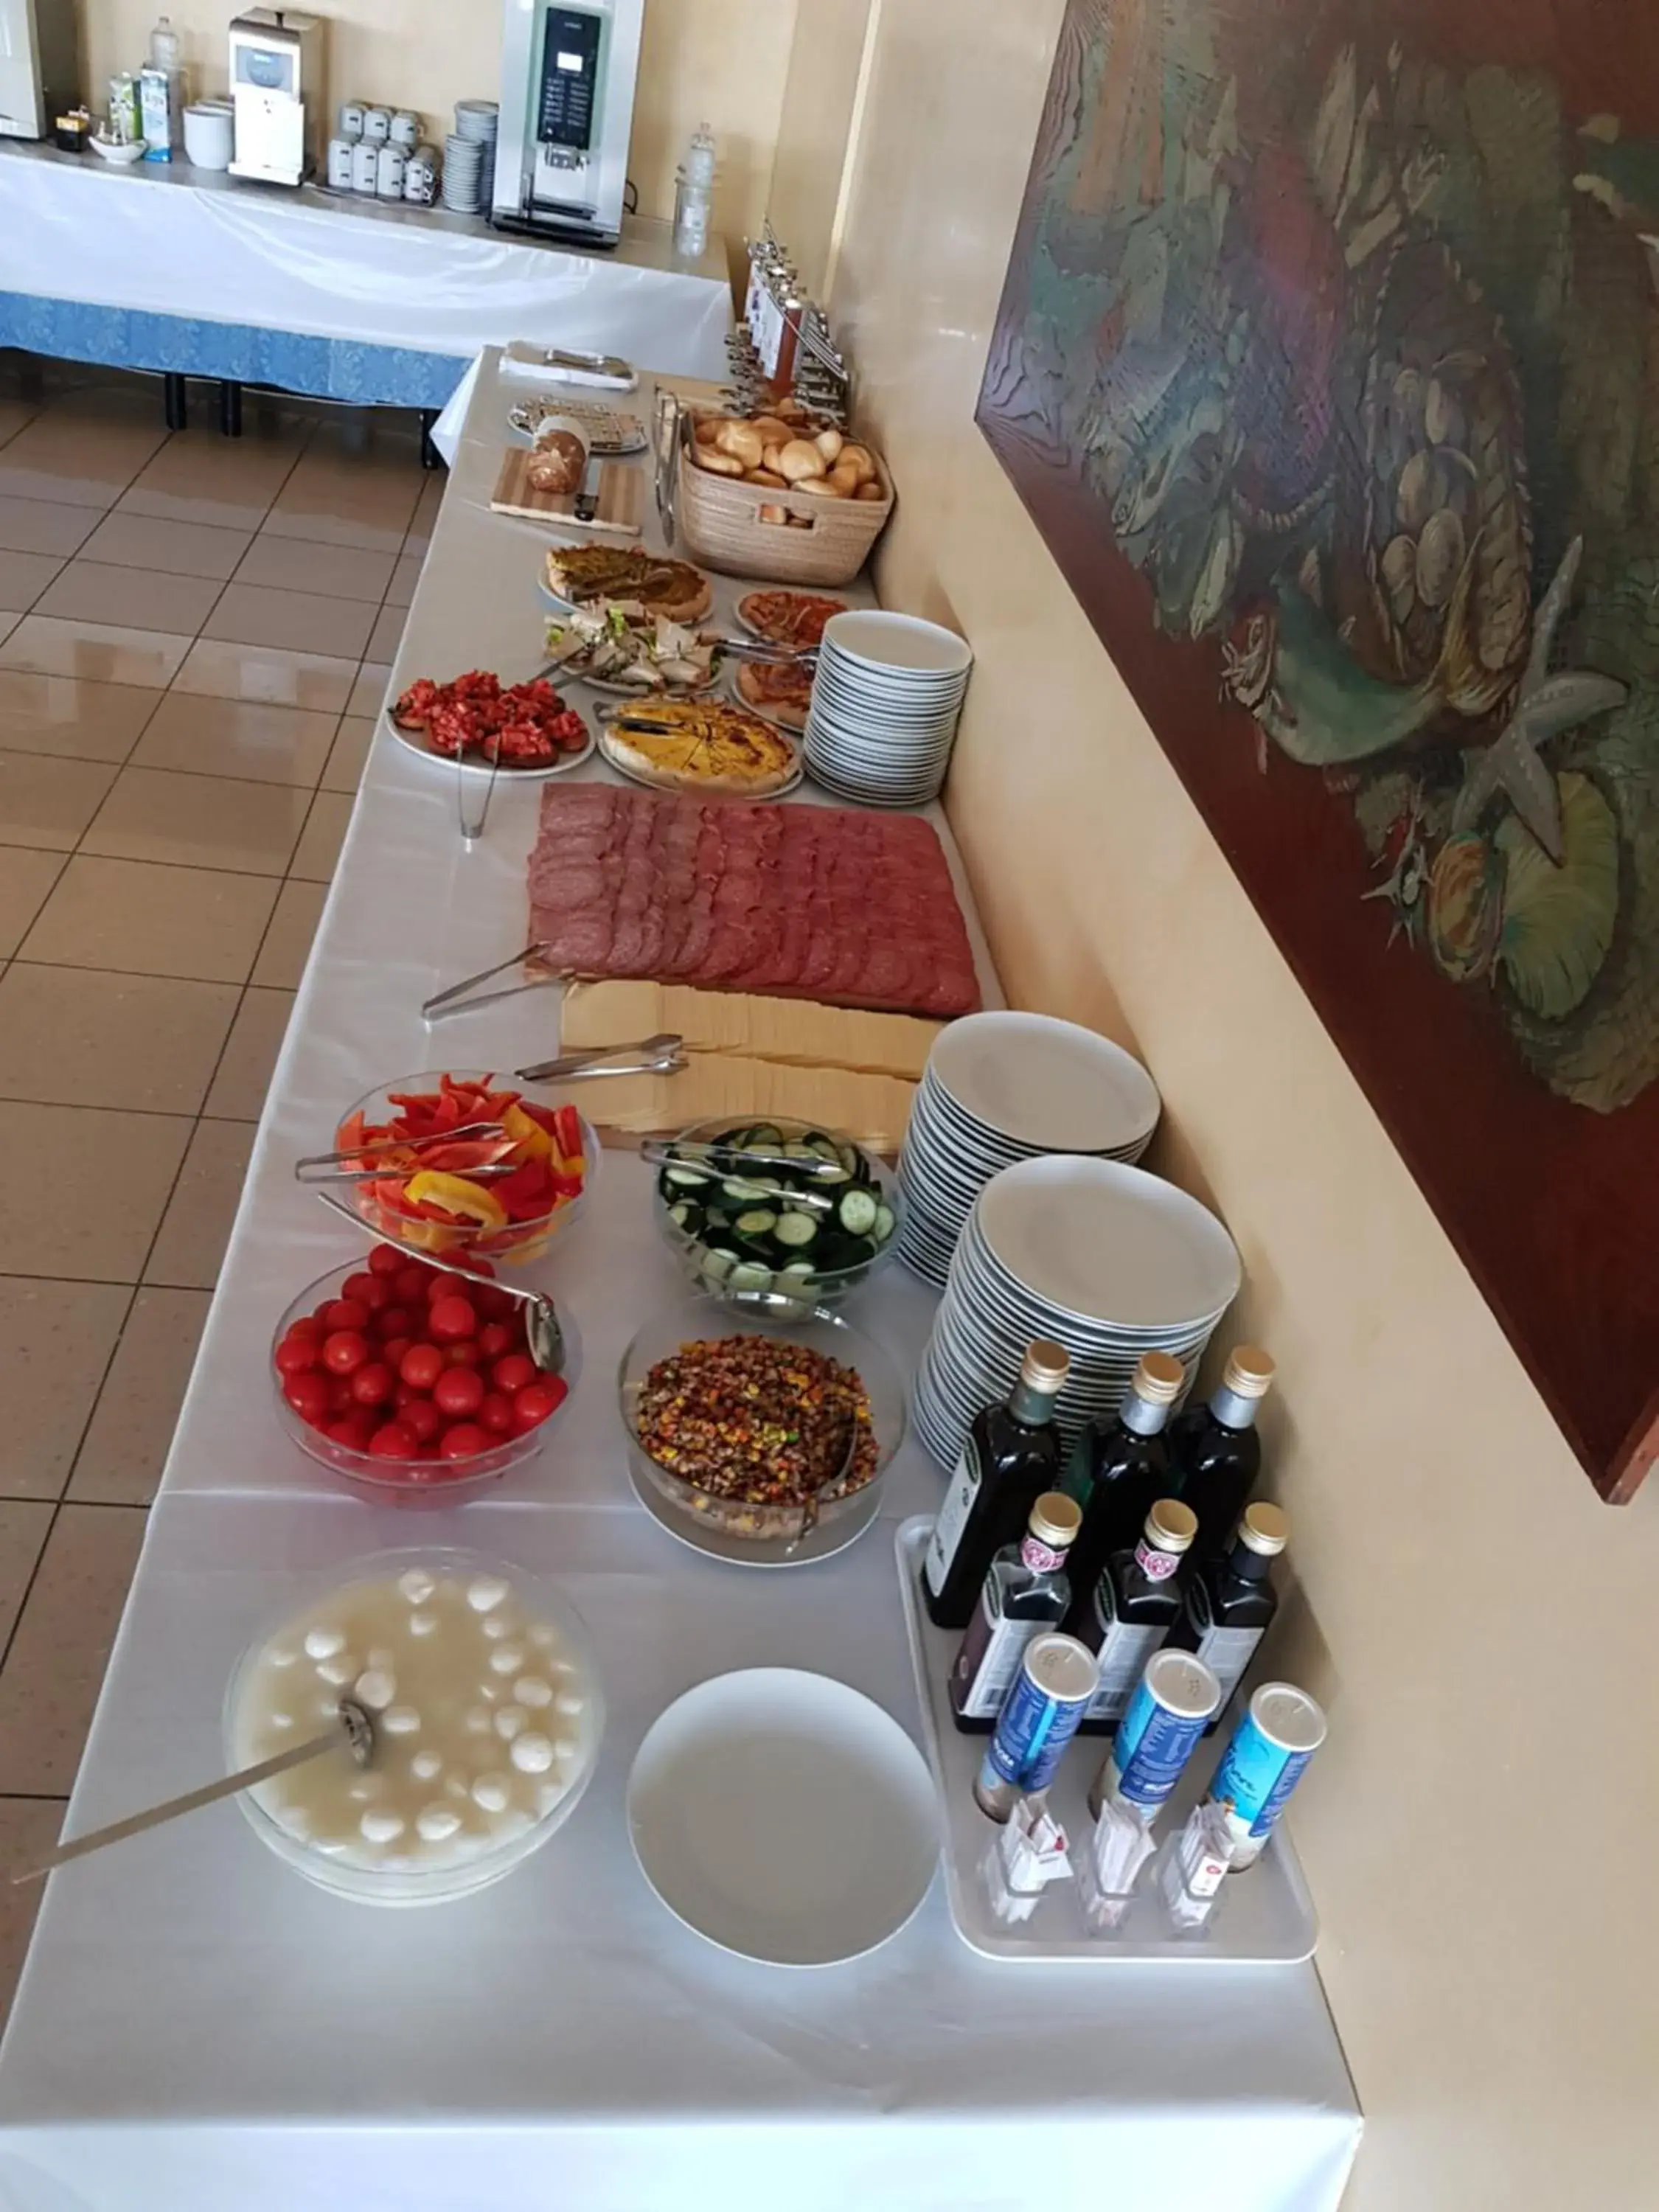 Buffet breakfast in Attianese Hotel Restaurant